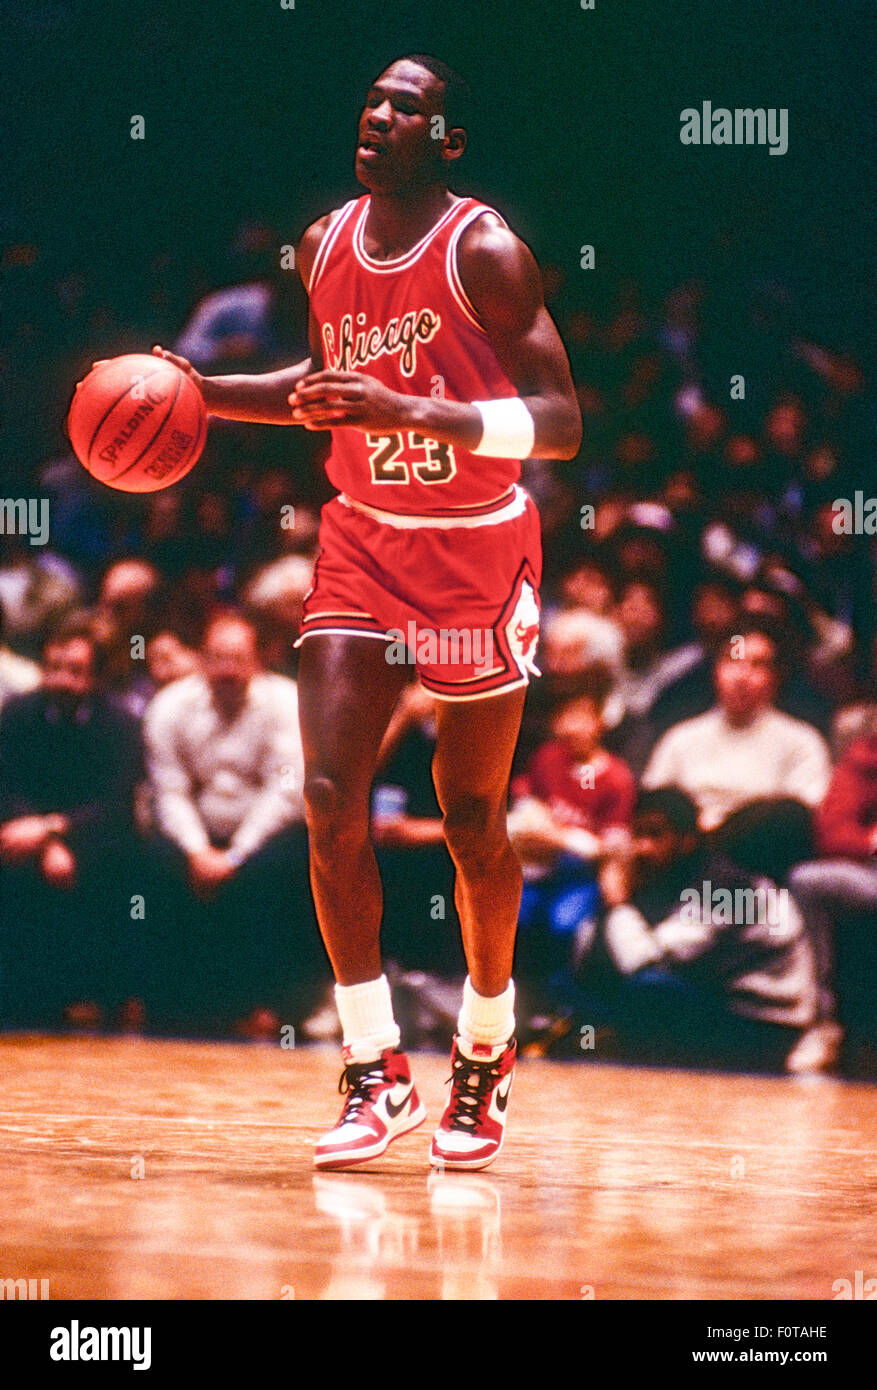 Michael Jordan competing for the NBA Chicago Bulls Stock Photo - Alamy